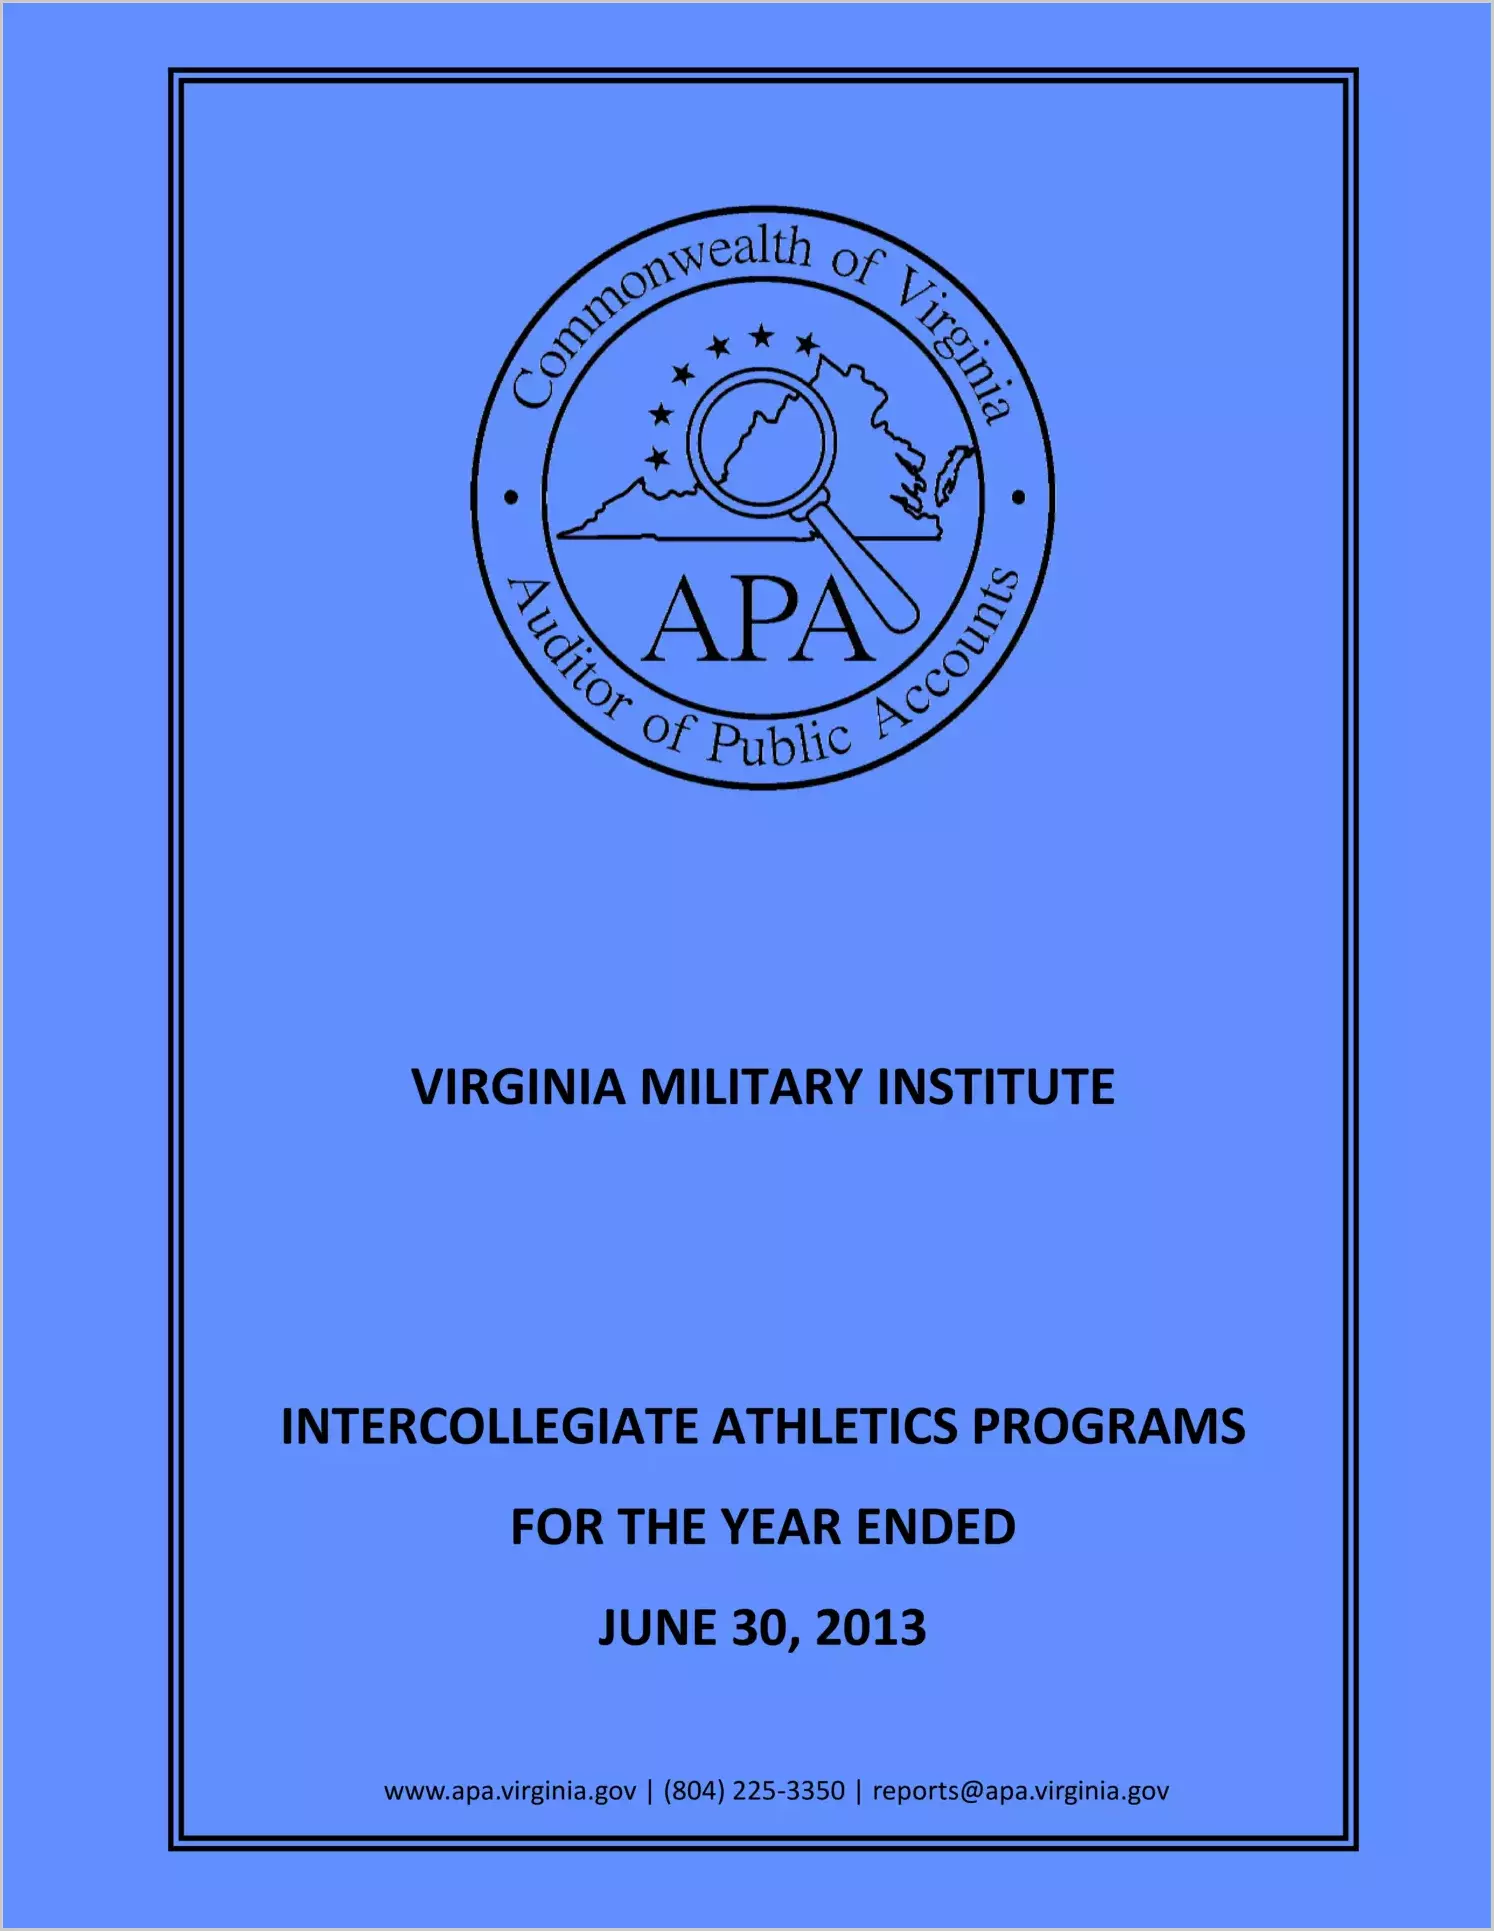 Virginia Military Institute Intercollegiate Athletics Programs for the year ended June 30, 2013